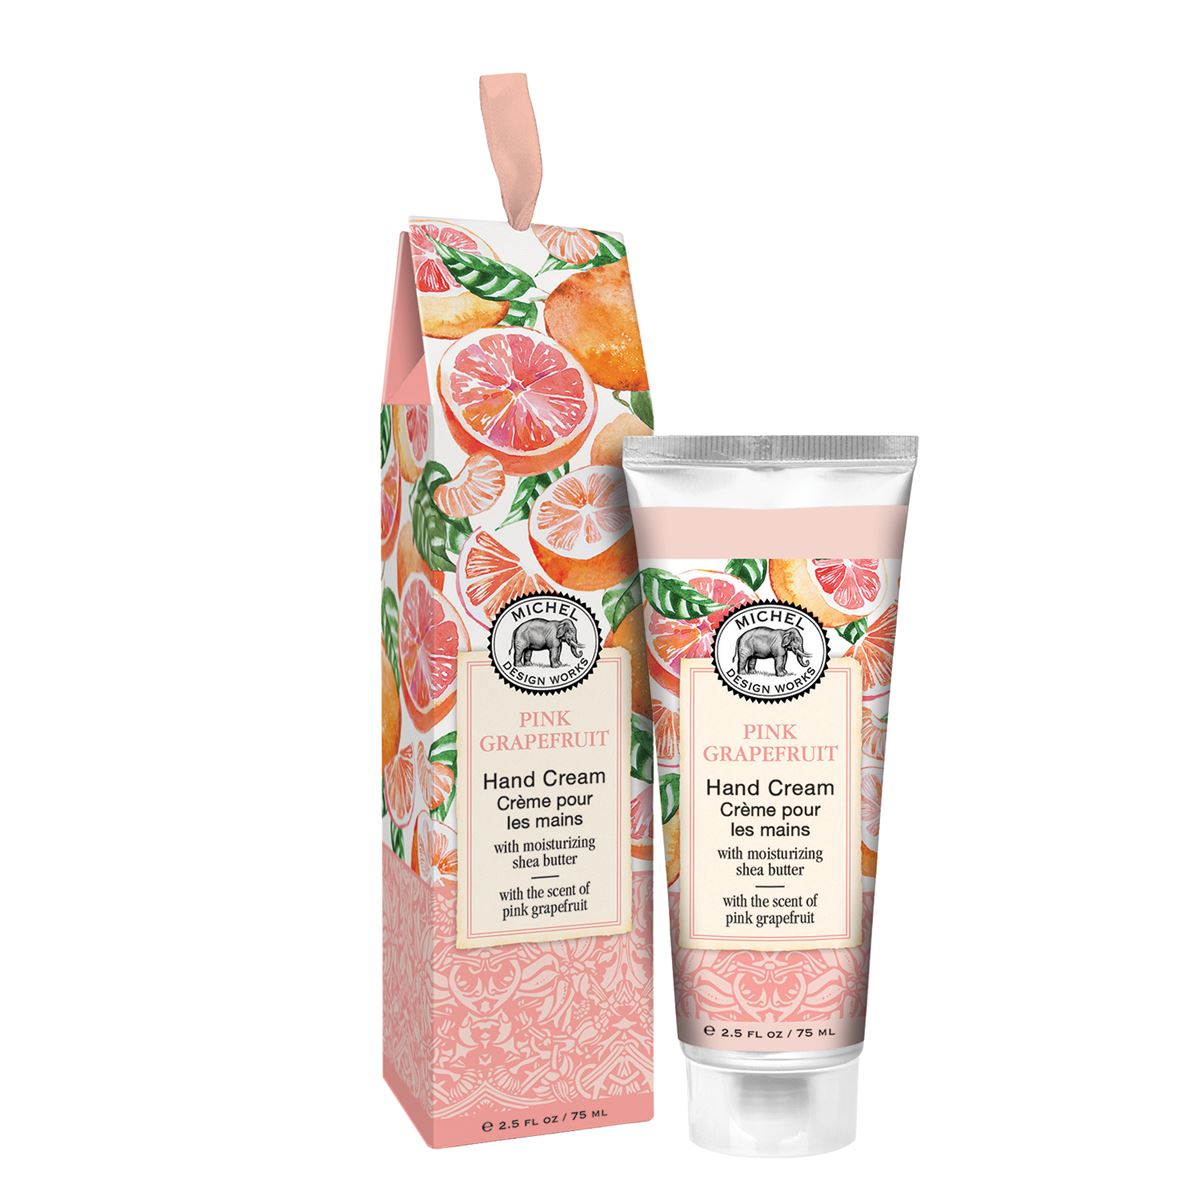 Pink Grapefruit Hand Cream 2.5 oz. Luxurious Shea Butter Blend in Decorative Gift Box